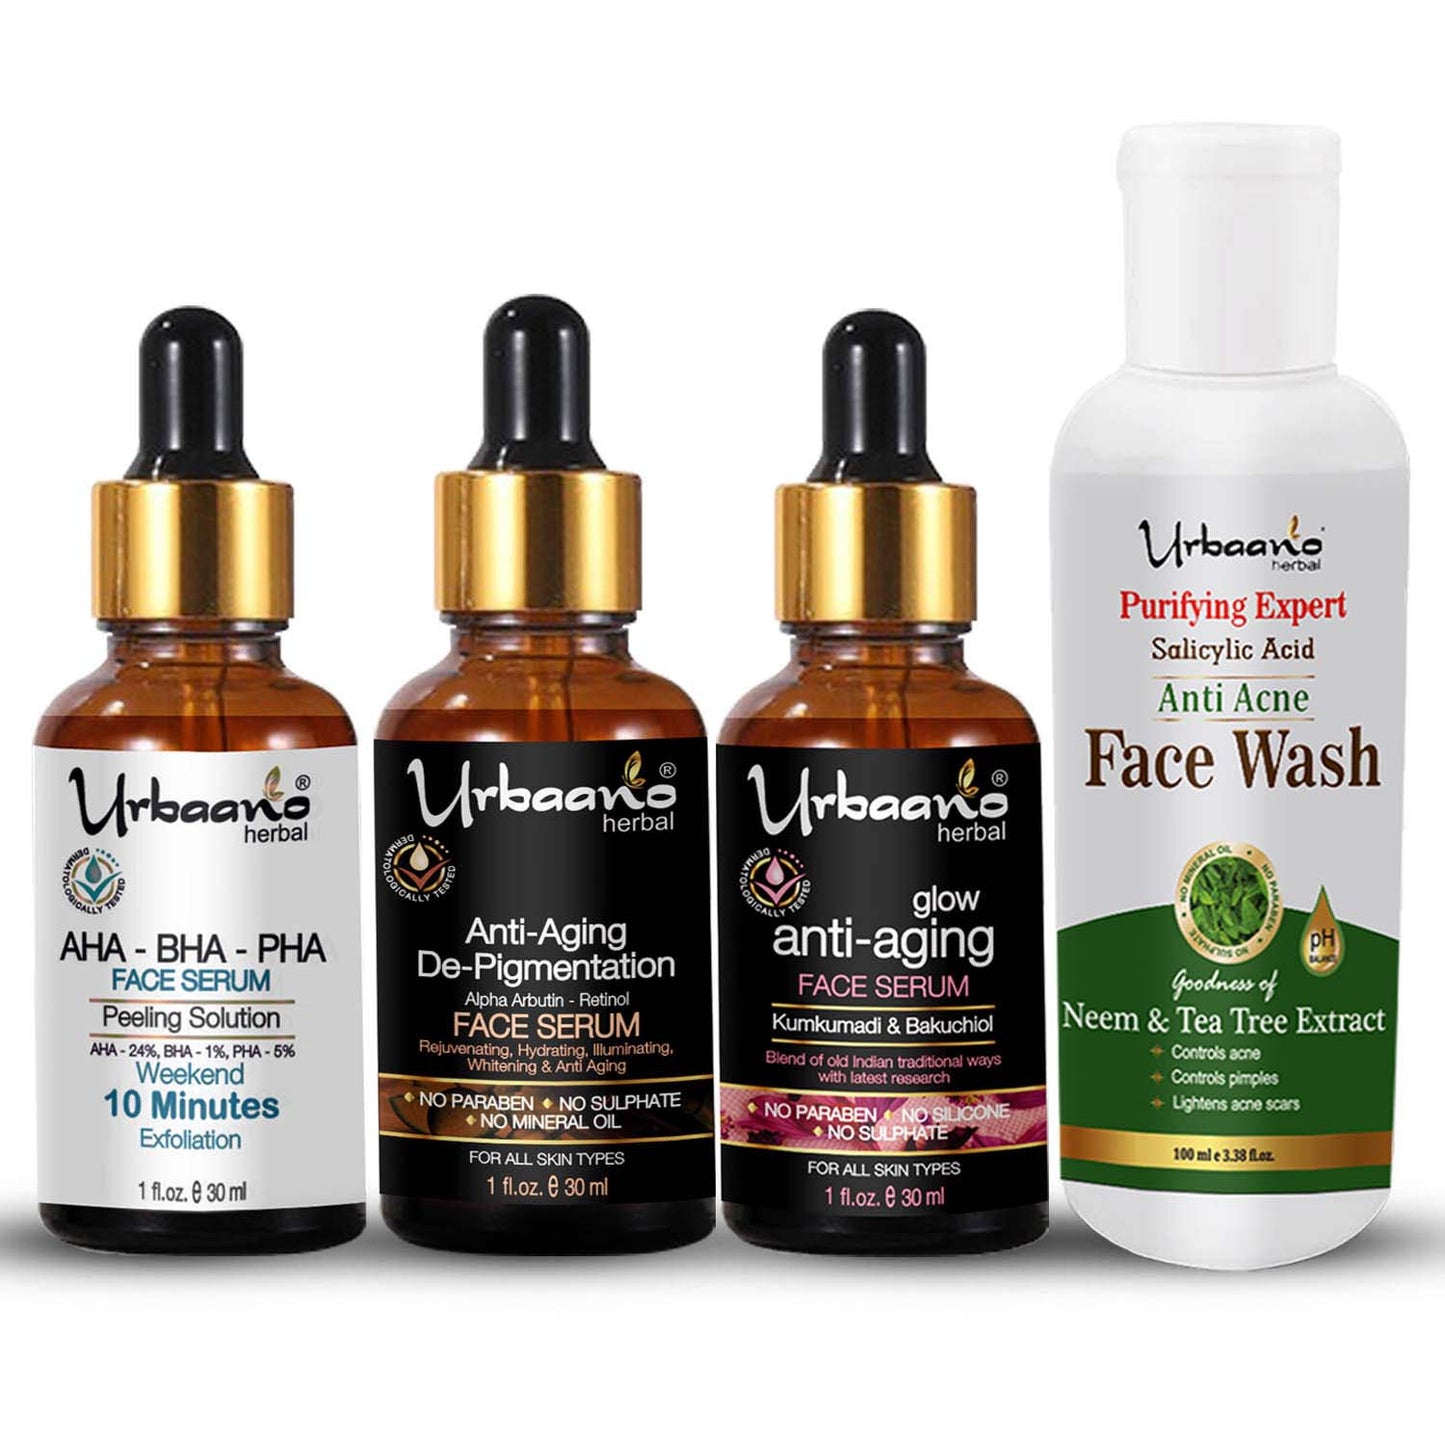 urbaano herbal anti aging, depigmentation serum kit - Aha serum, vitamin c arbutin serum, kumkumadi tailam, anti acne face wash